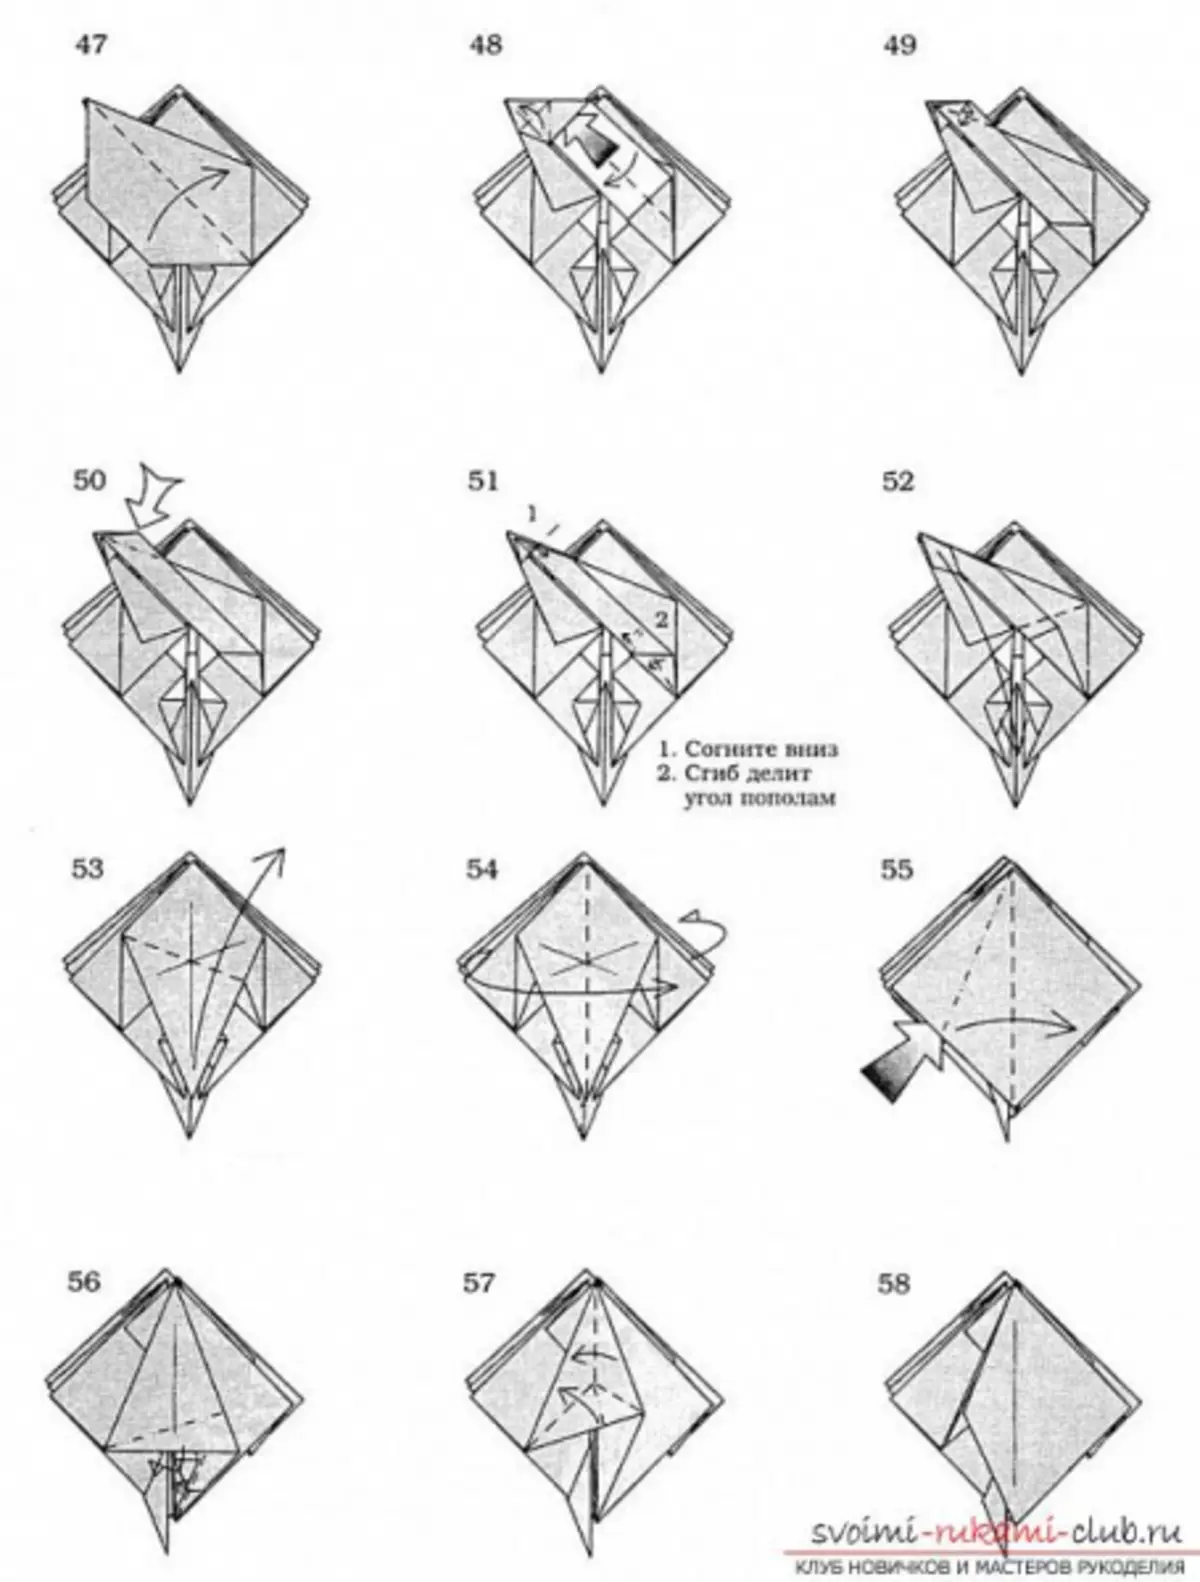 Origami Dragon จากกระดาษ: วิธีการทำสำหรับผู้เริ่มต้นด้วยโครงการและวิดีโอ